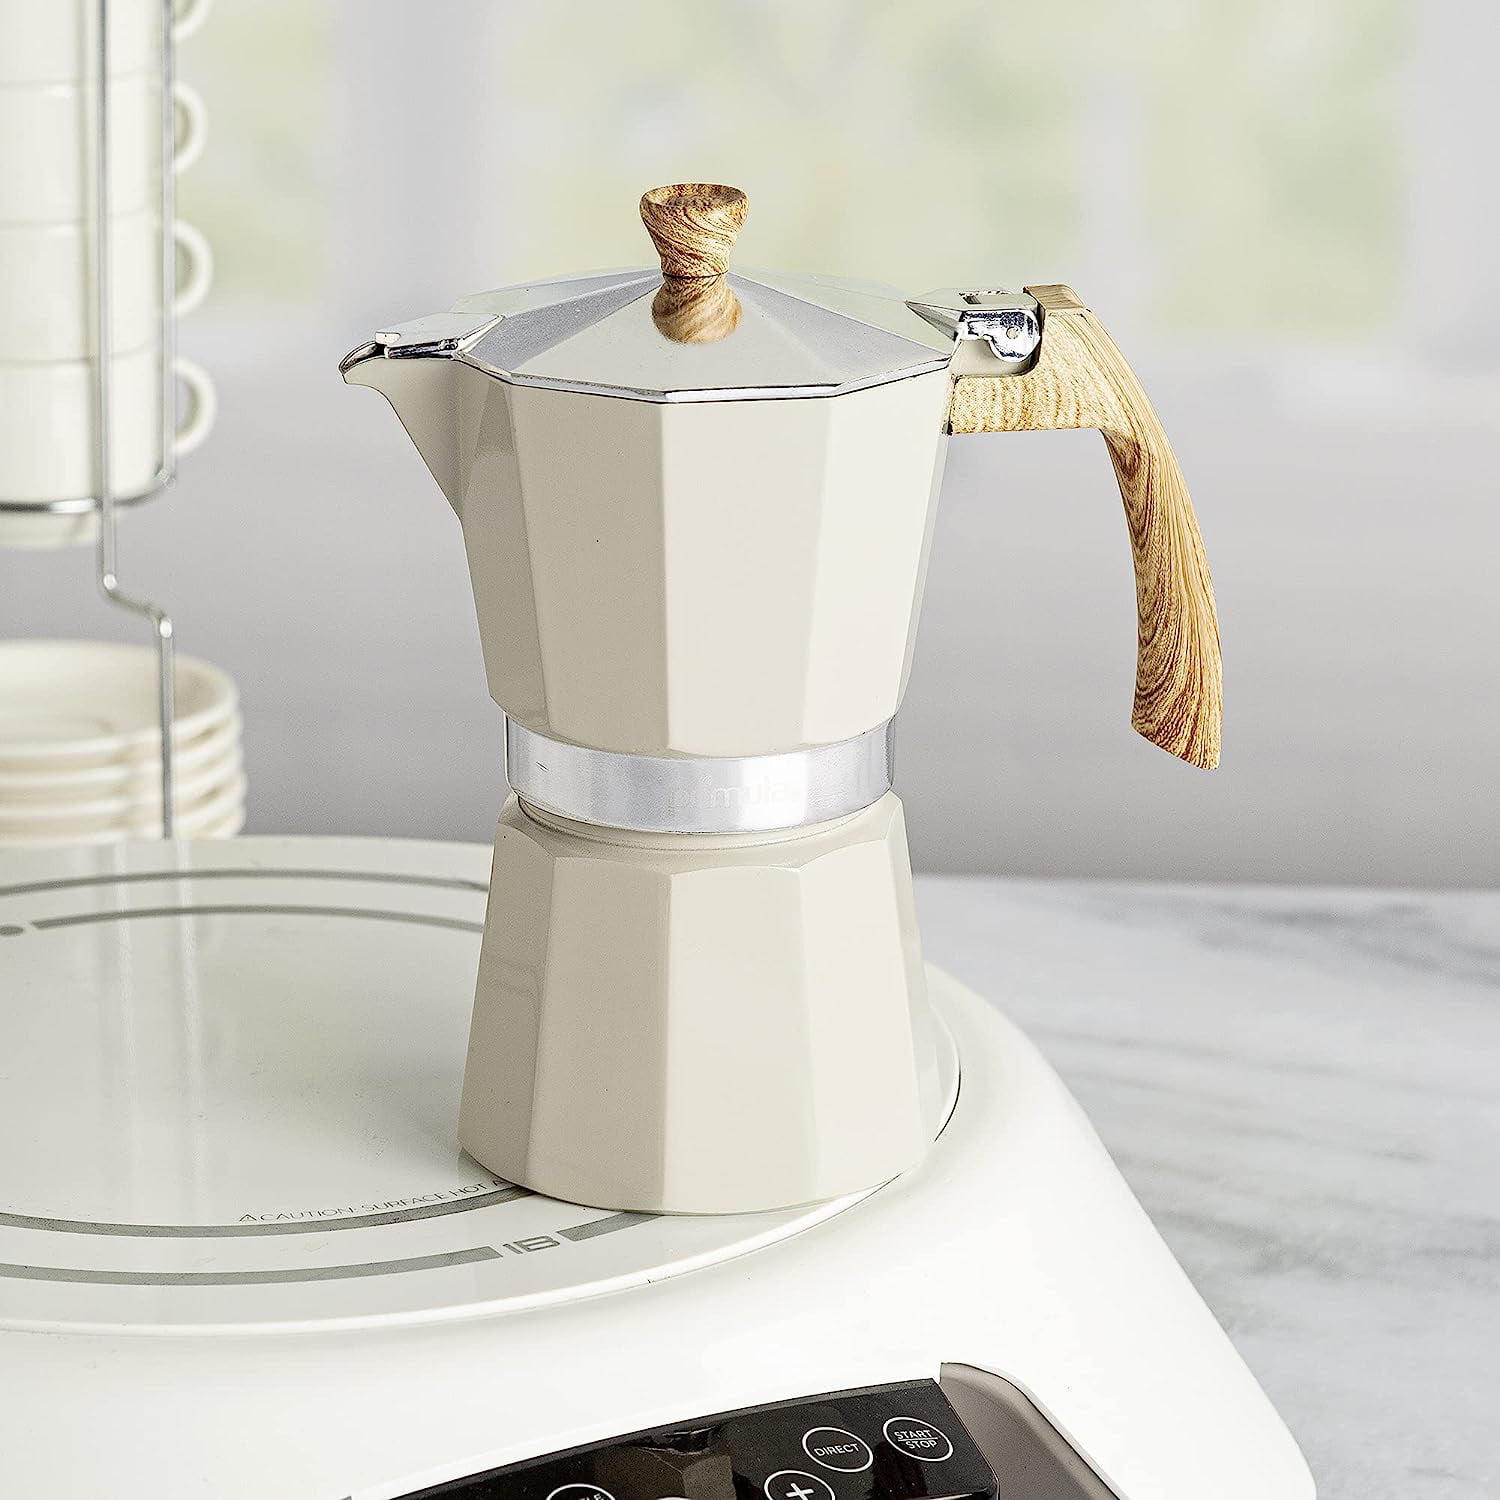 Latte Mocha Coffee Maker Italian Moka Espresso Cafeteira Percolator Pot Stovetop Coffee Maker 300ml Pink, Size: 17.5